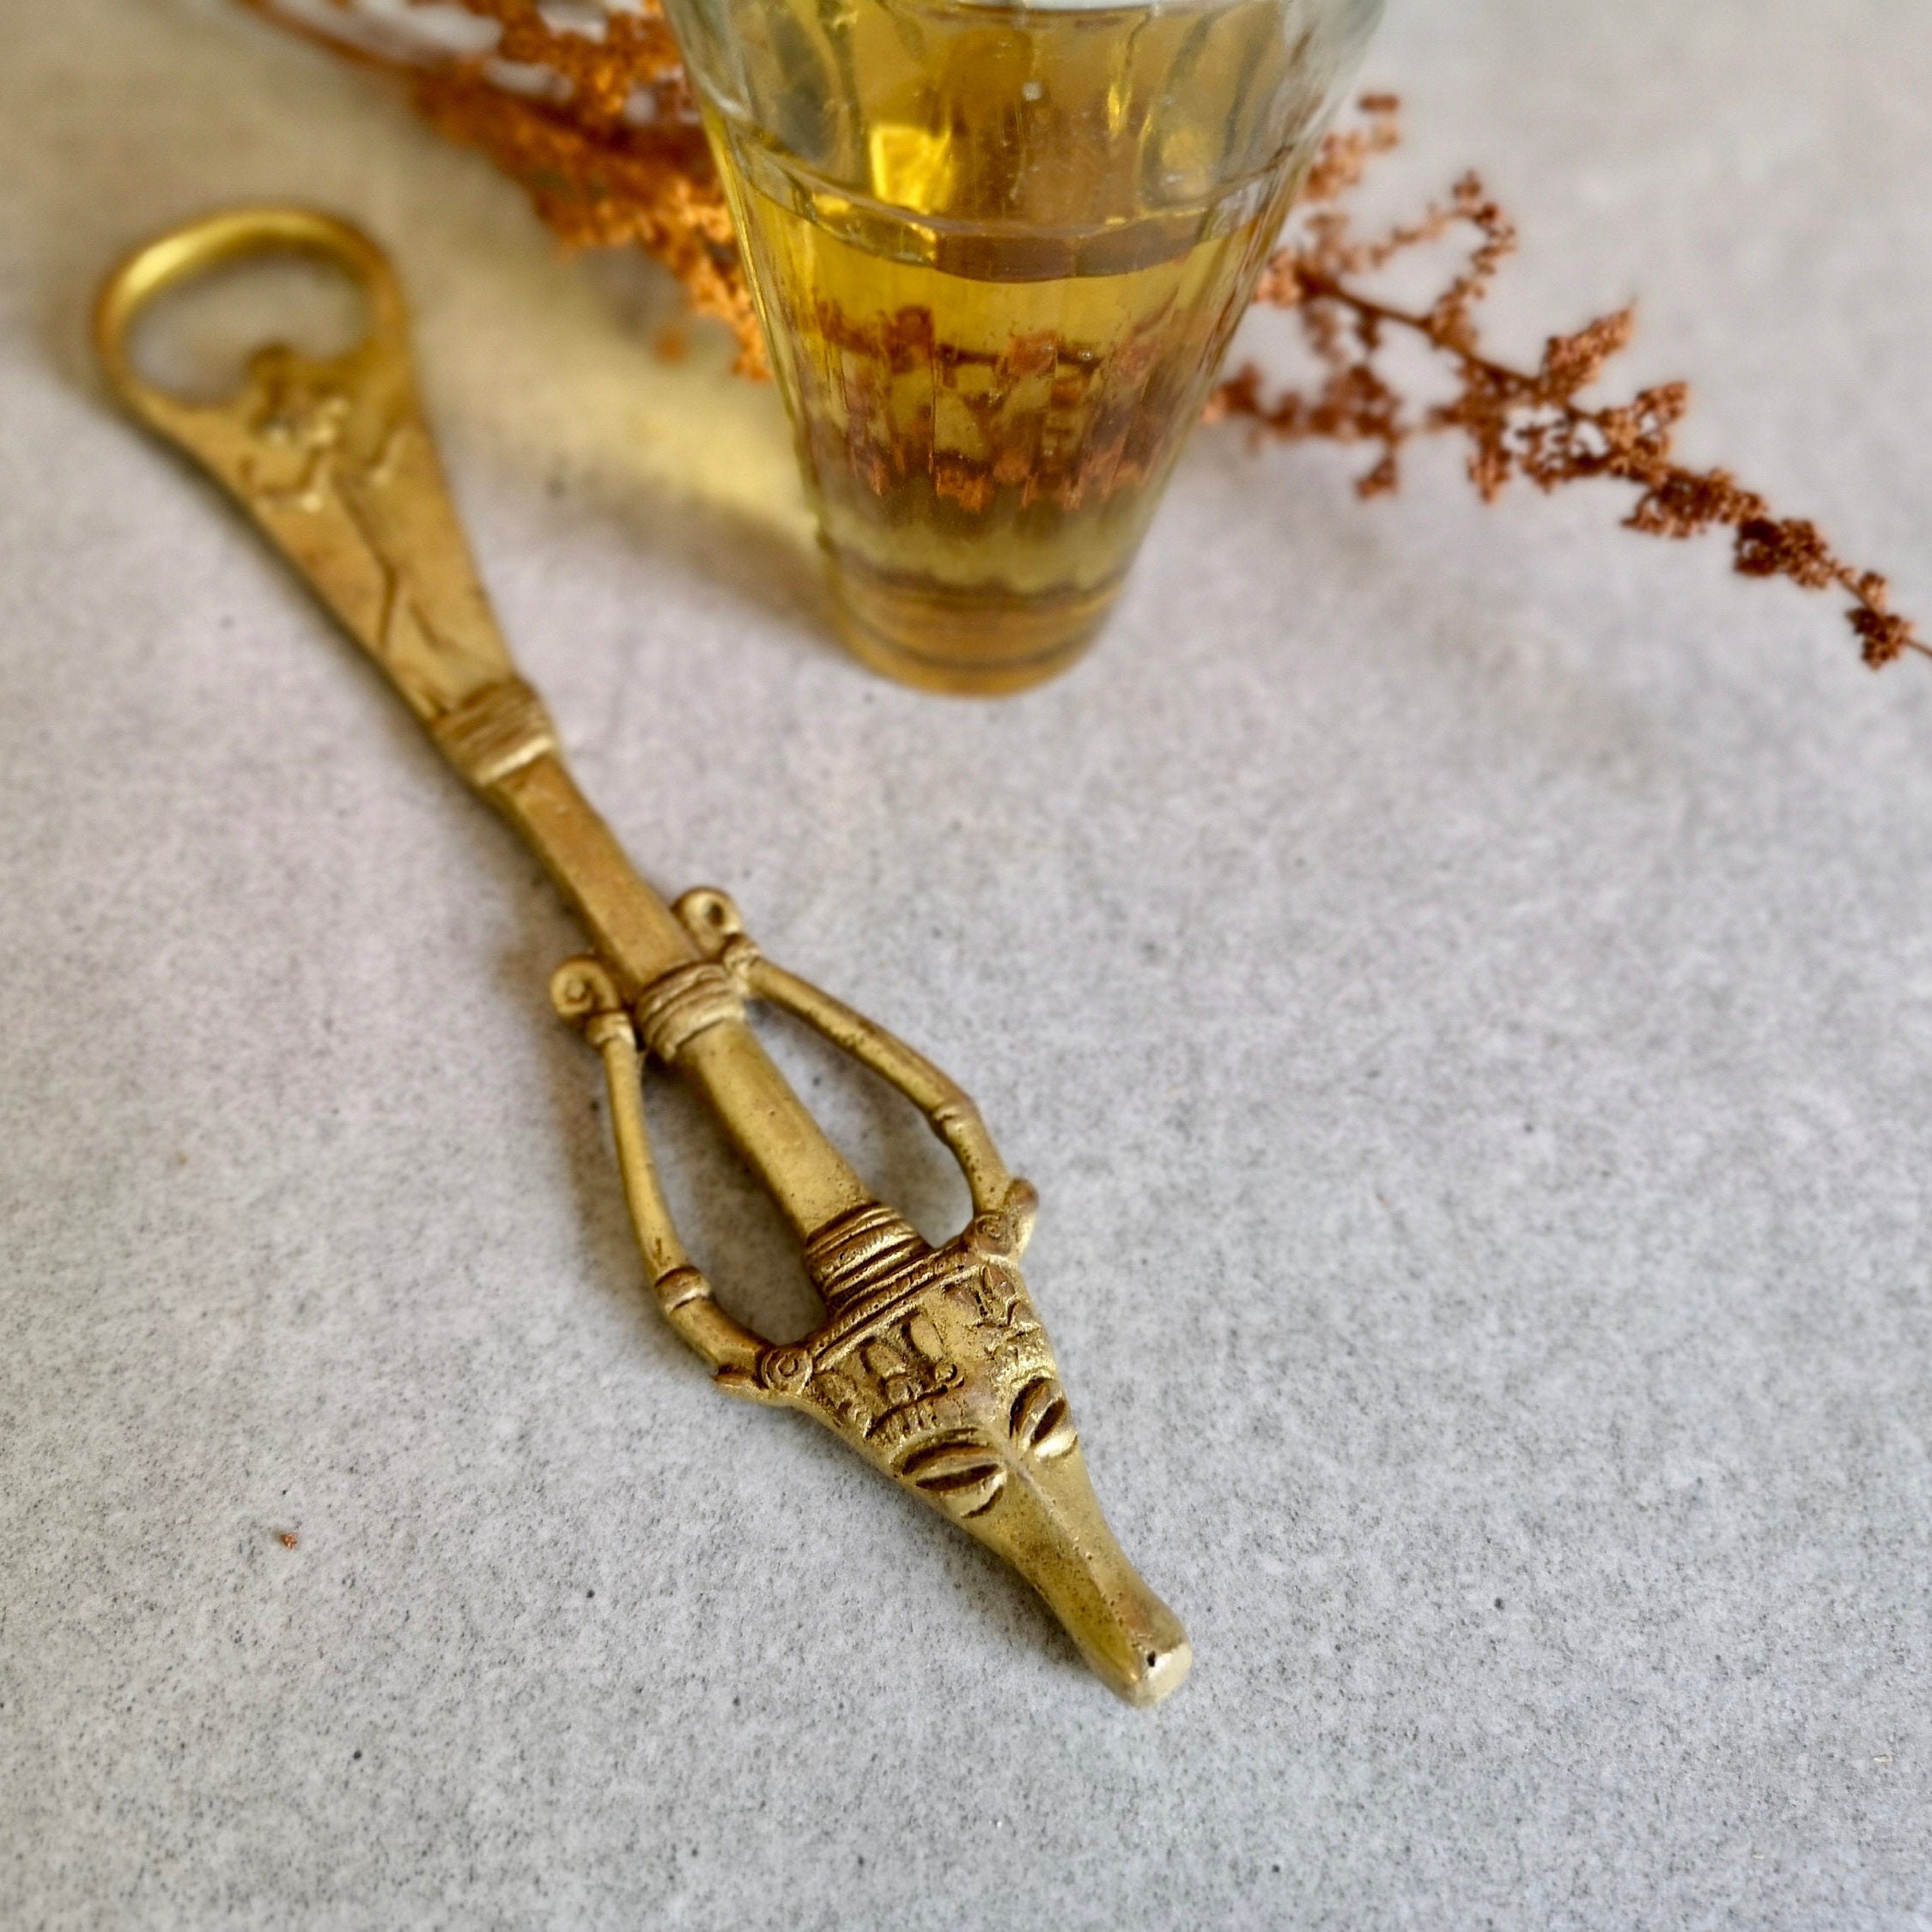 Antique Brass Bottle Opener, Brass Bar Accessory, Ornate Bottle